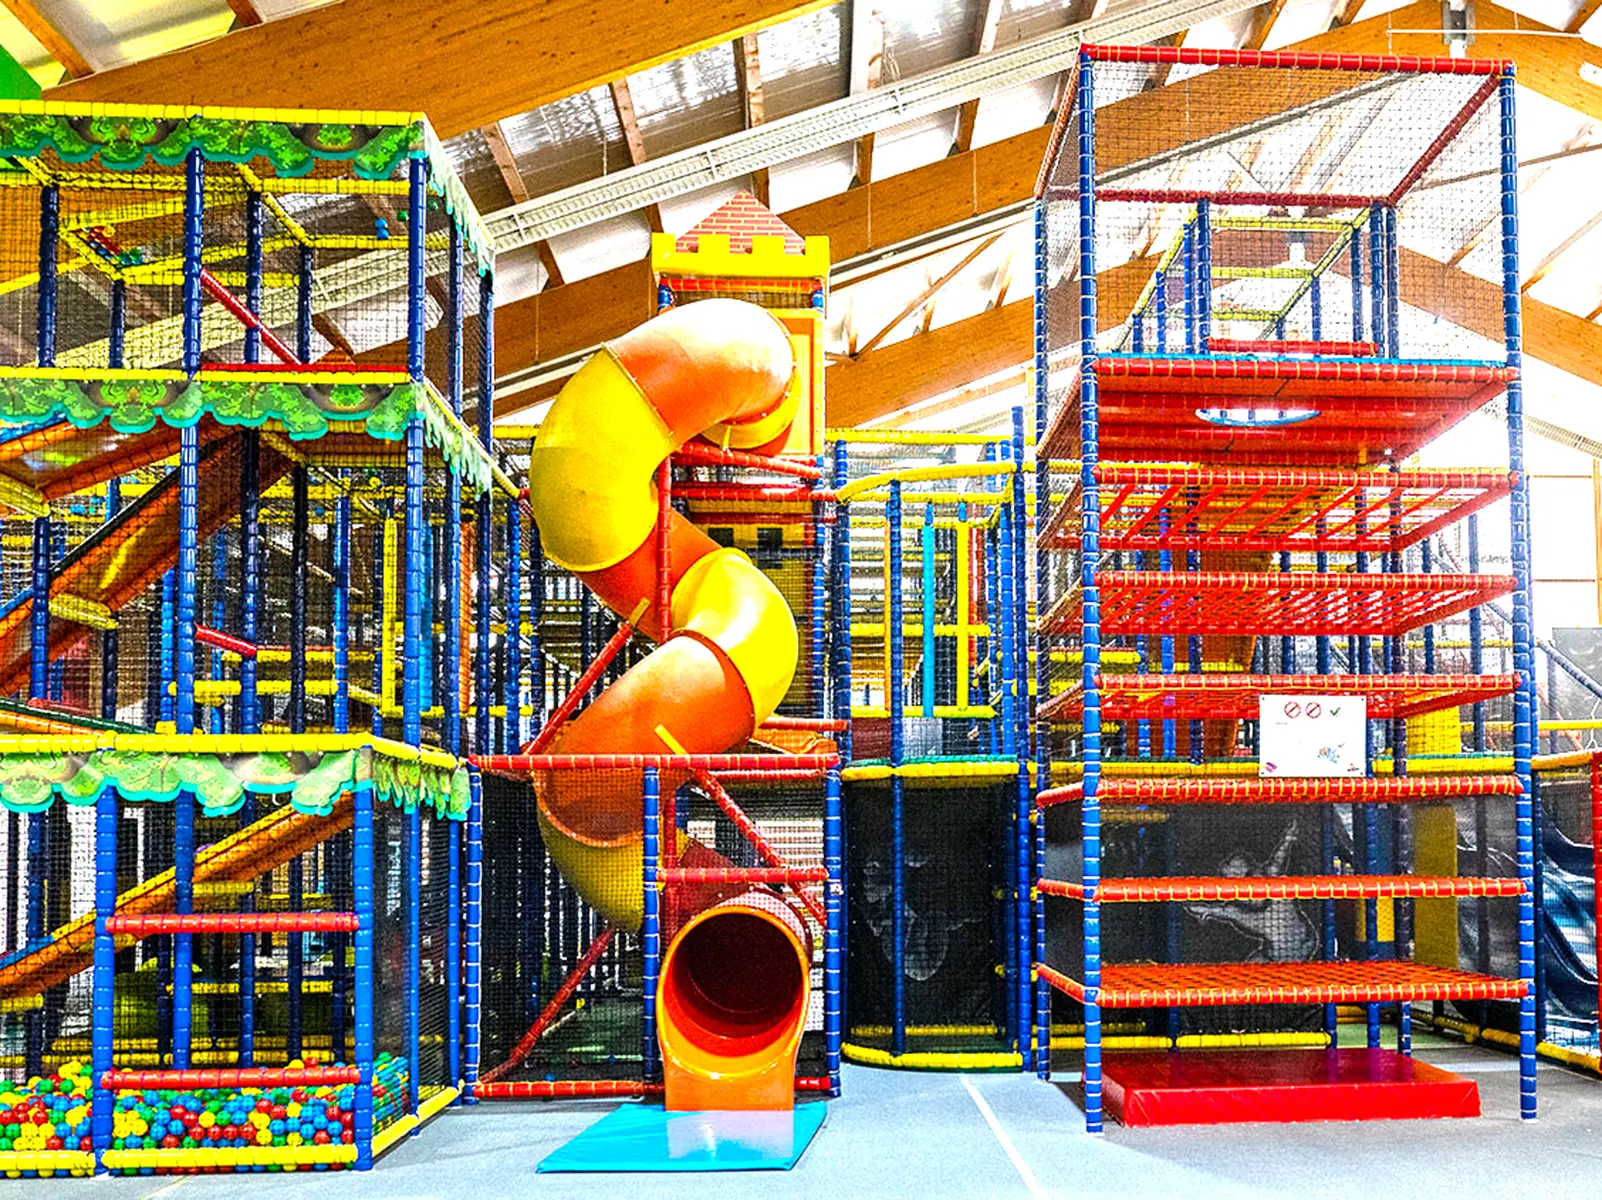 Indoor playground children slide form European producer in Germany 